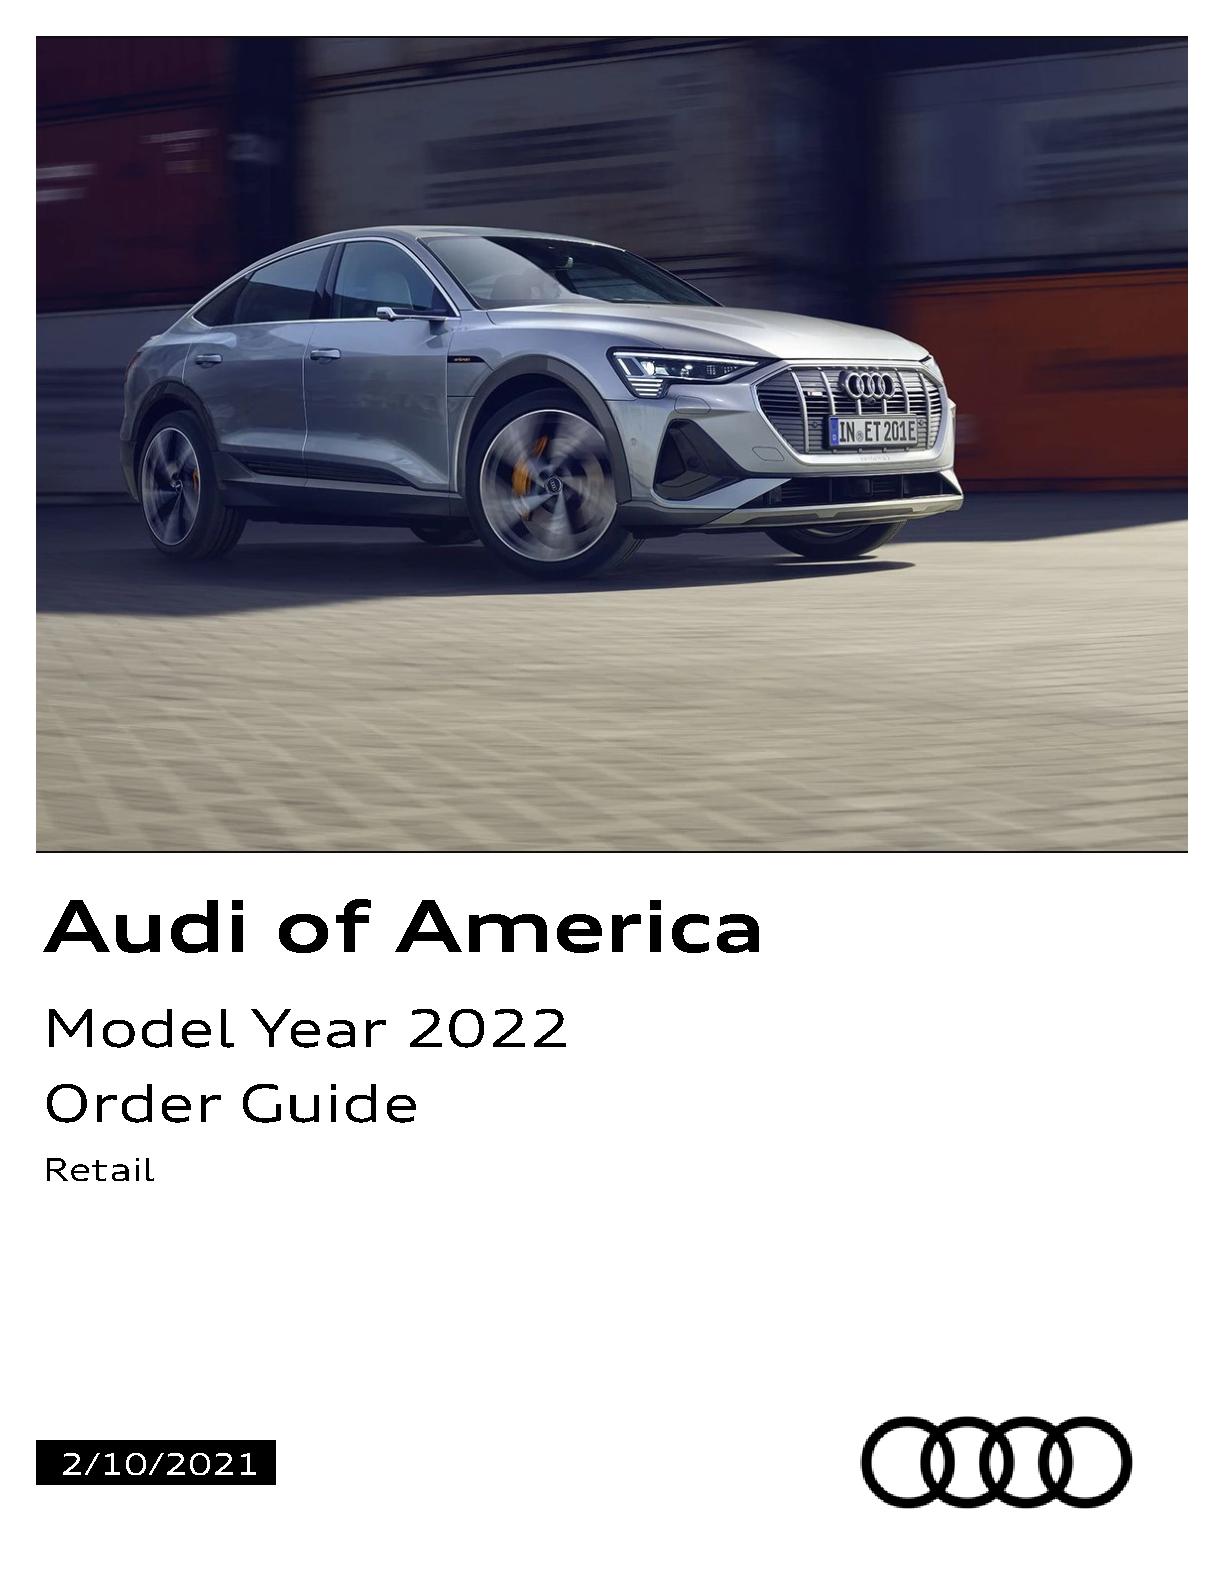 Audi+Order+Guide+2022+USA+(Retail)+02.10.21.pdf | PDF Host